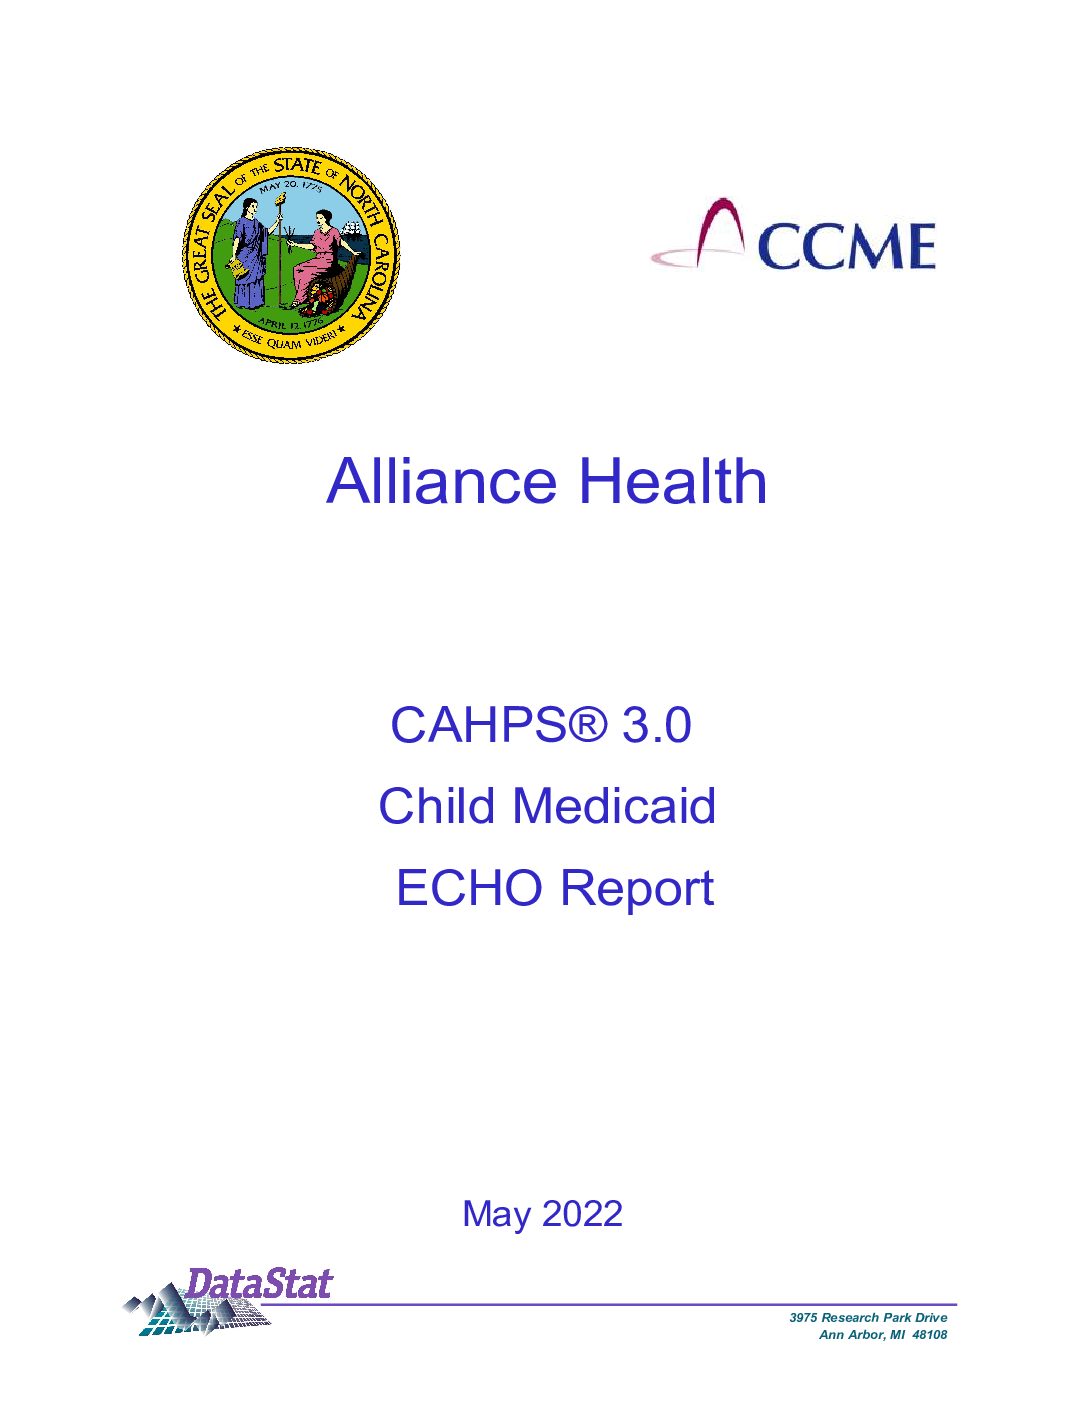 2021 Child Medicaid ECHO Report